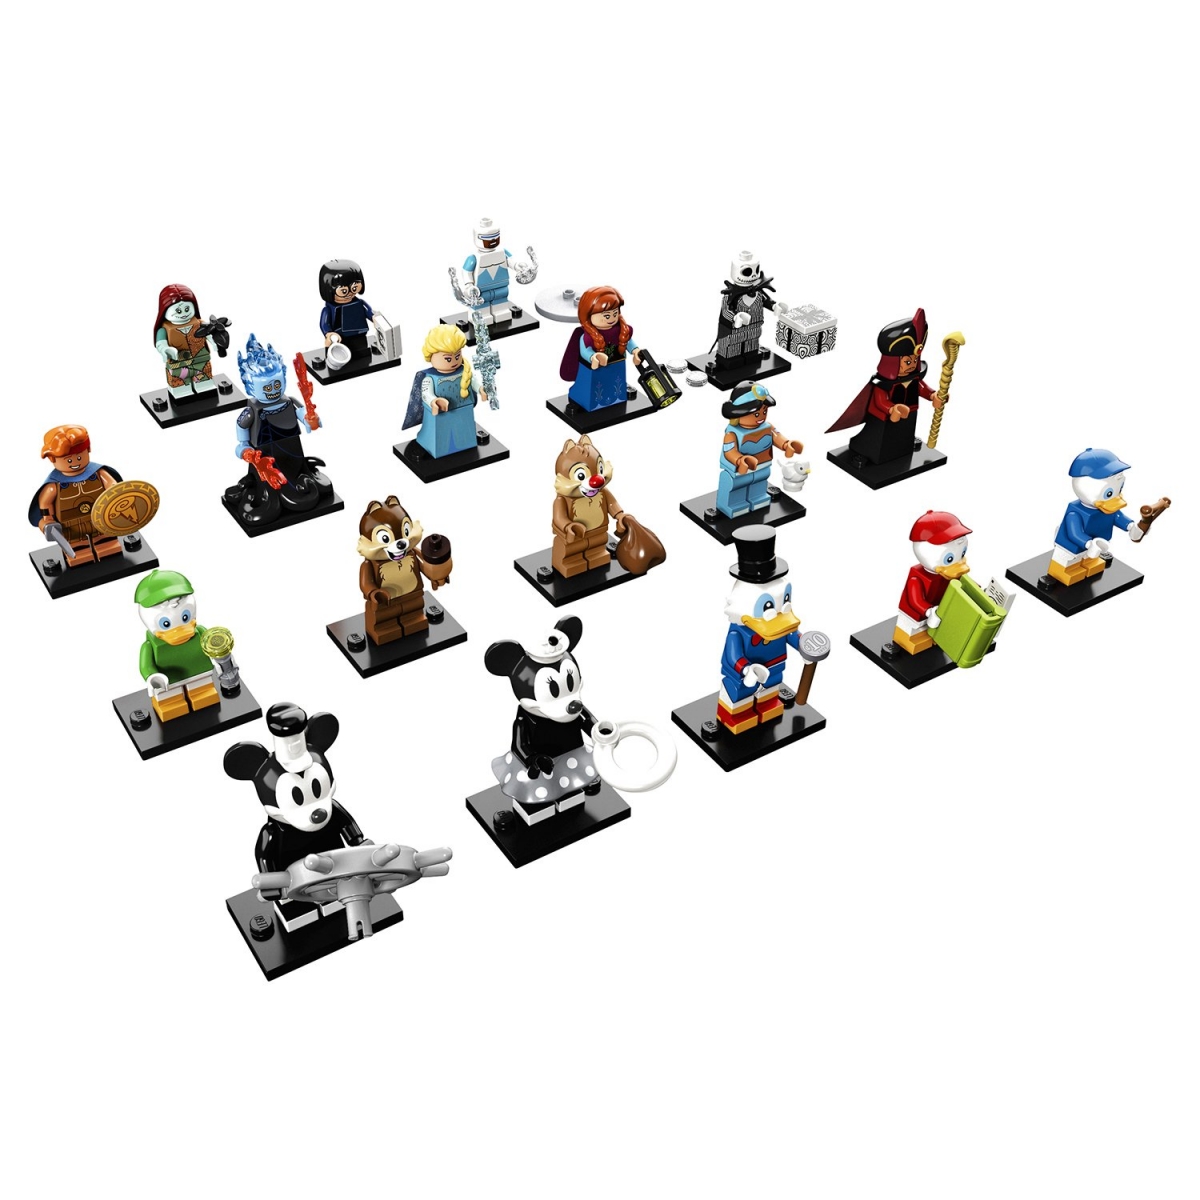   Lego Minifigures Disney 2